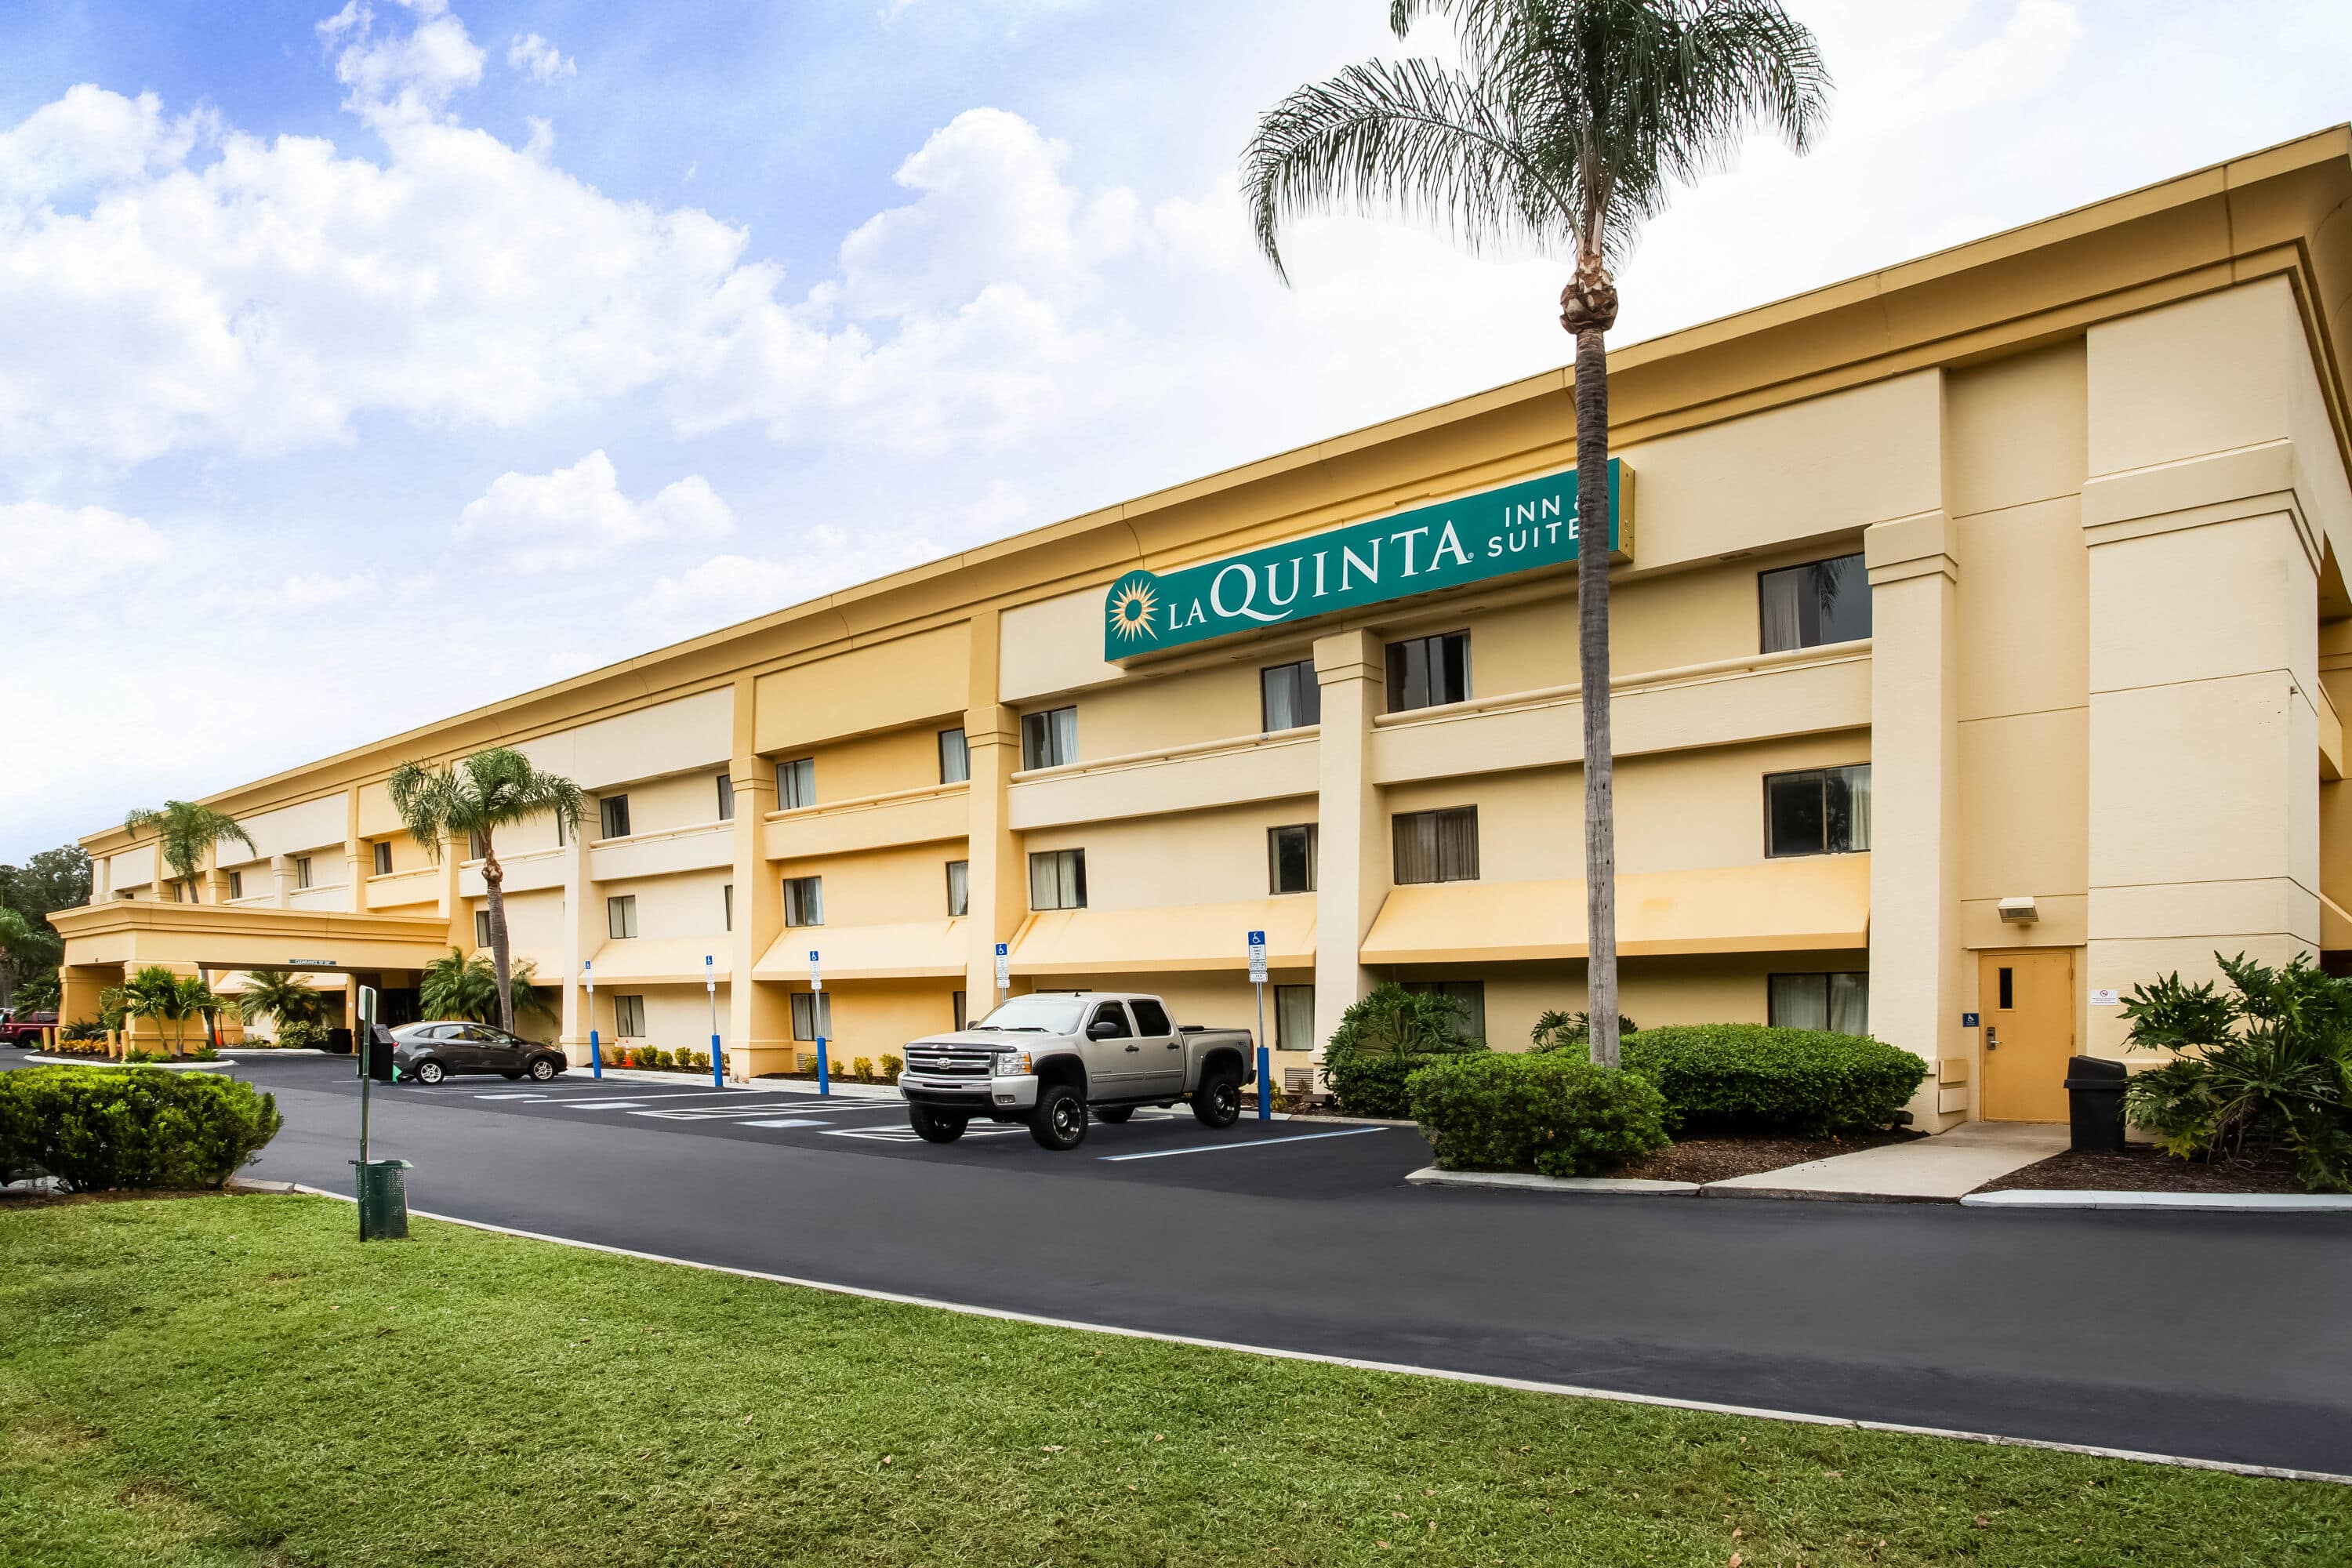 La Quinta Inn & Suites by Wyndham Tampa Fairgrounds Casino Tampa